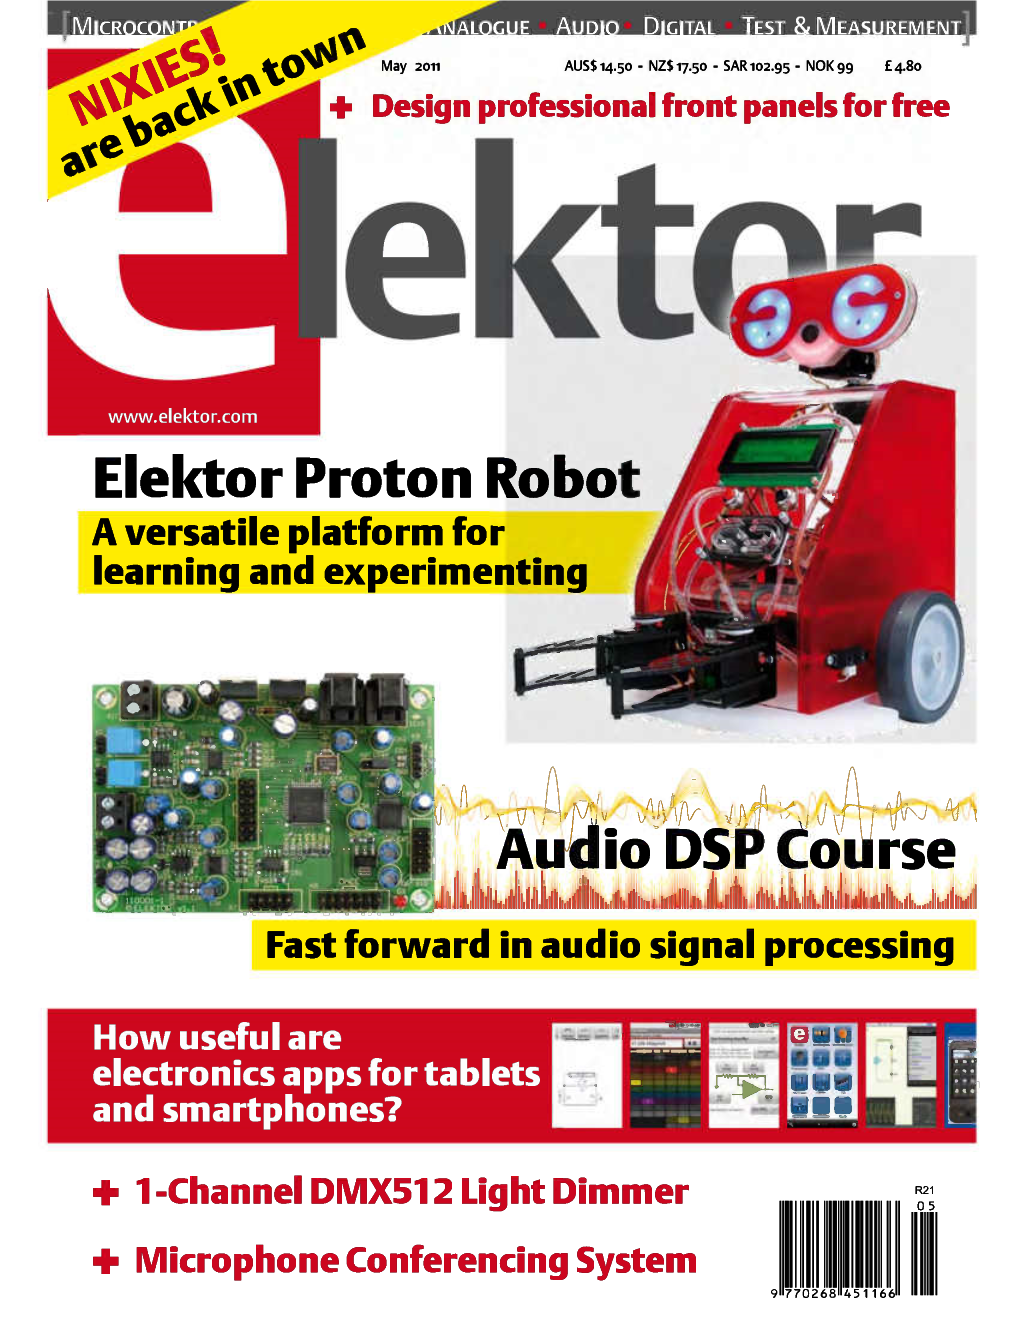 Elektor Proton Robot Audio DSP Co Rse 111